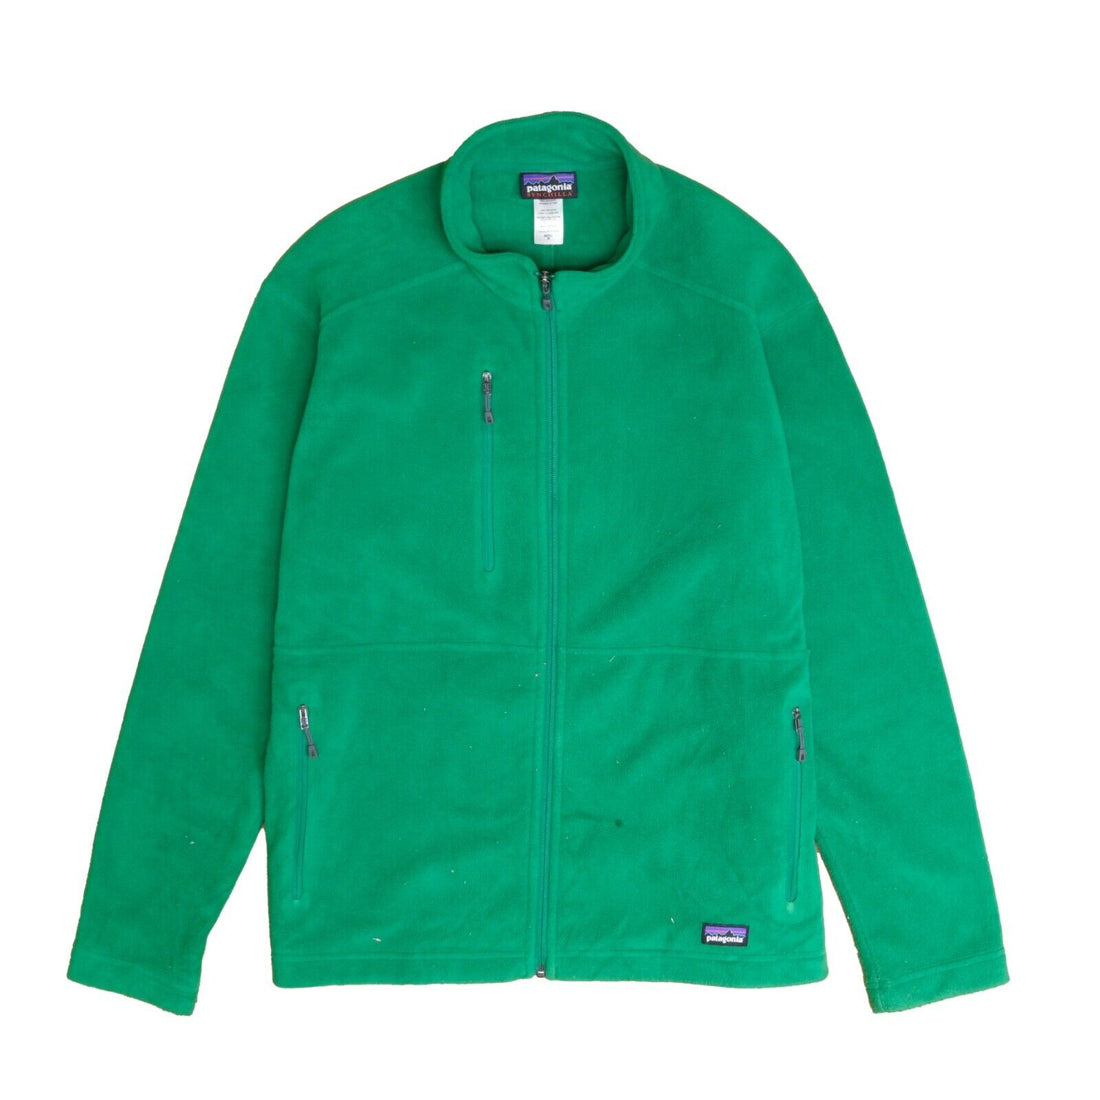 Vintage Patagonia Synchilla Fleece Jacket Size Medium Green Full Zip